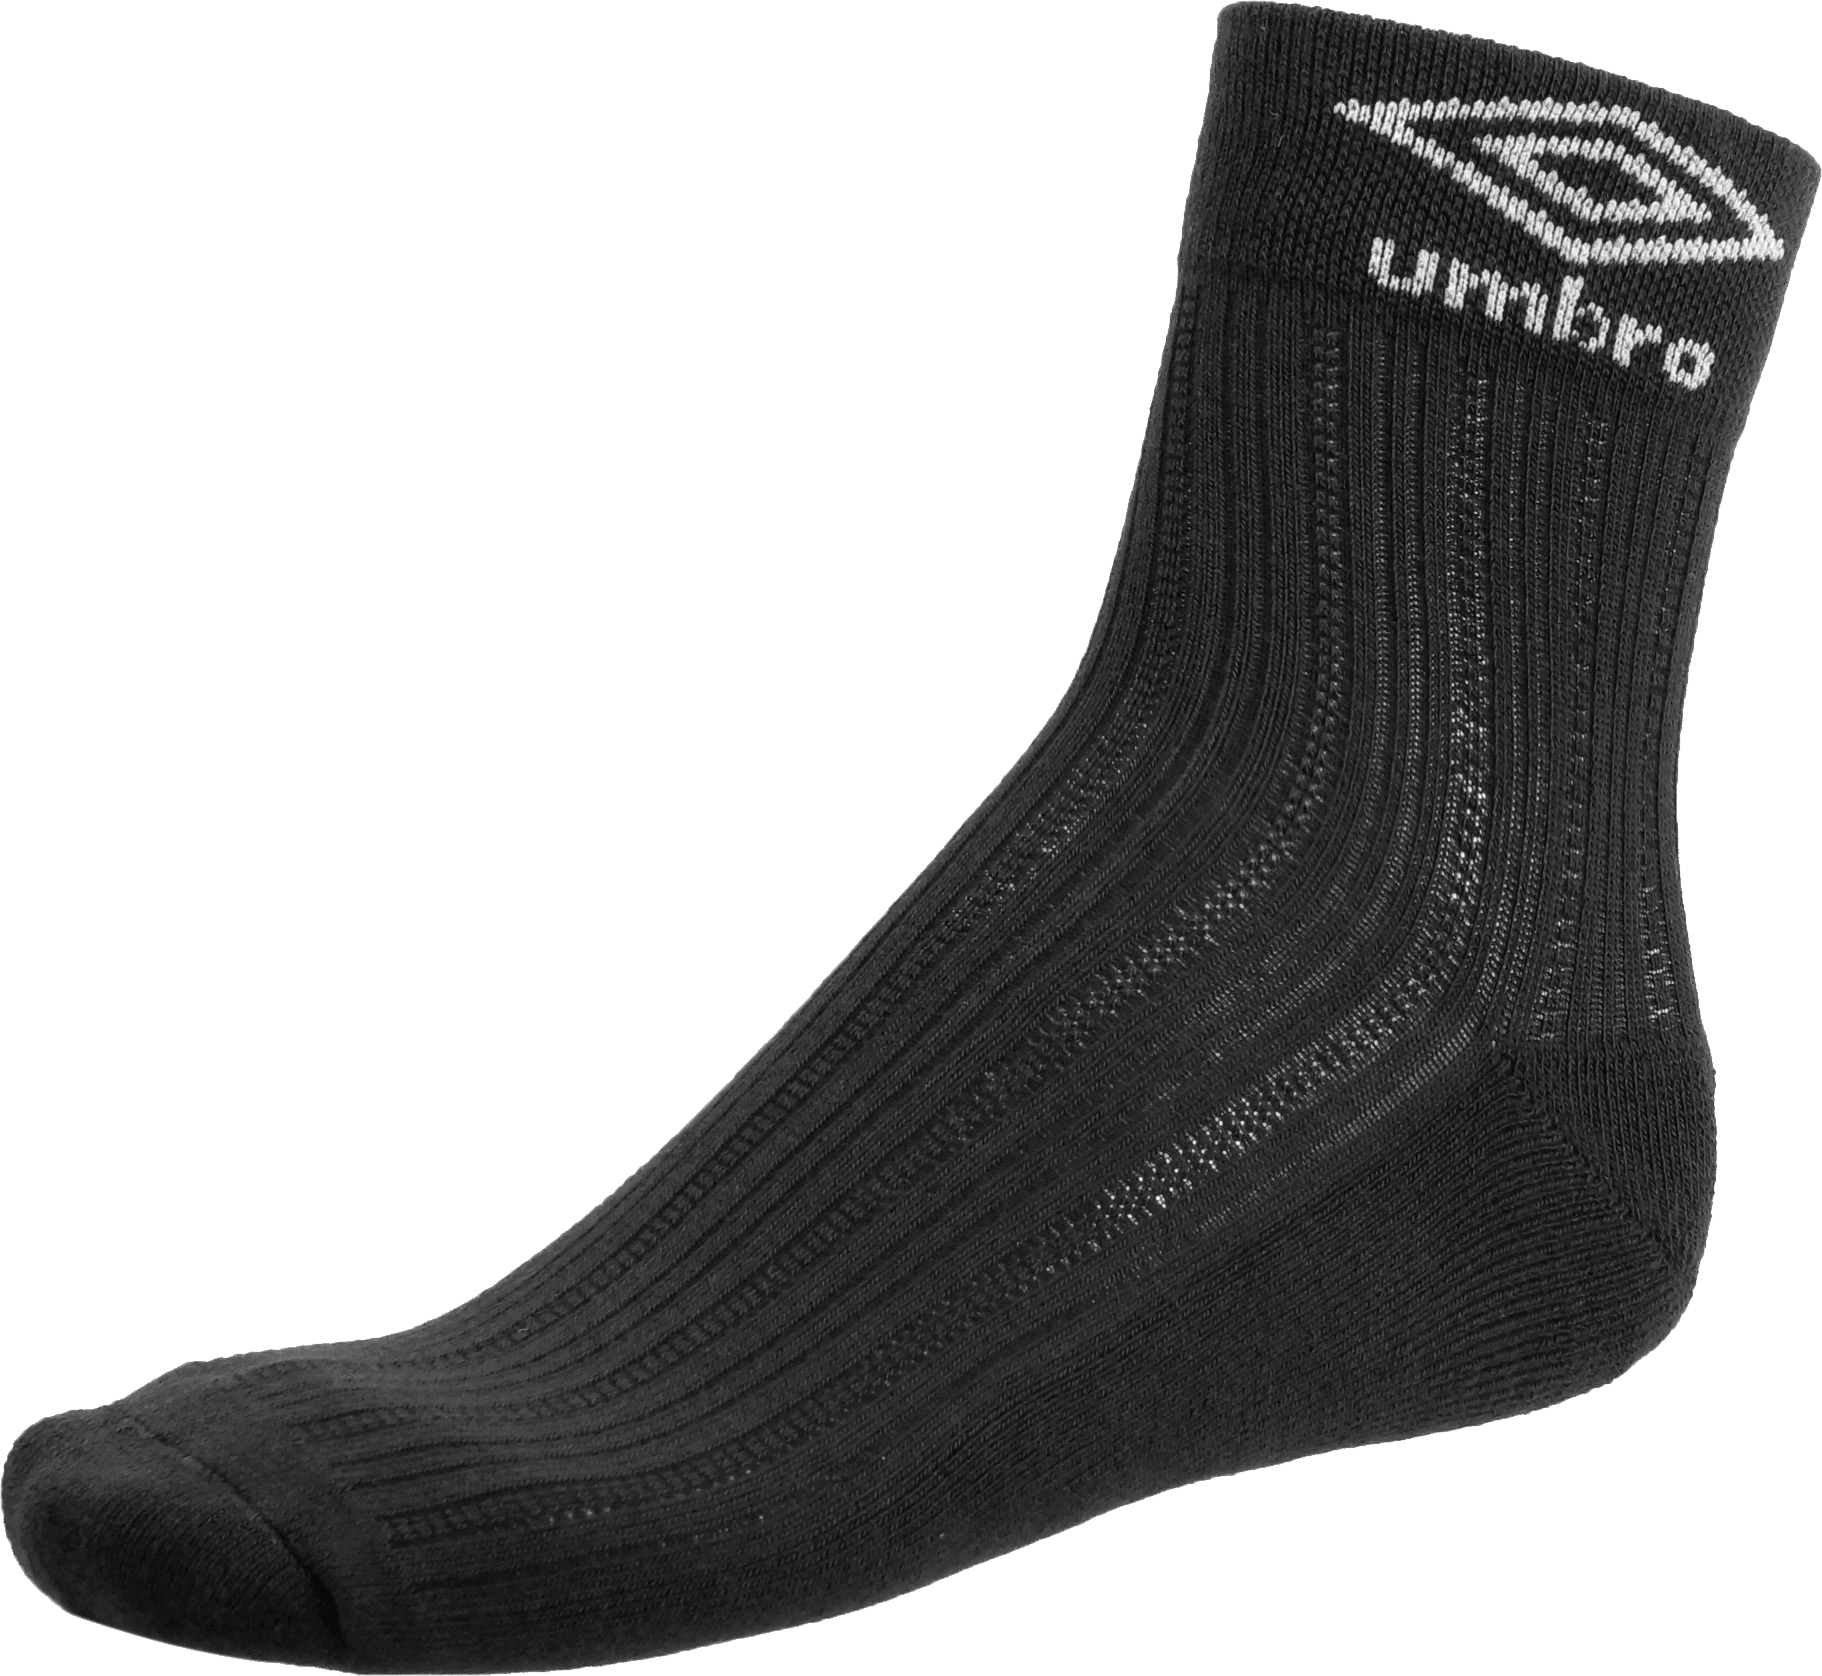 Black Umbro Crew Sock PNG image